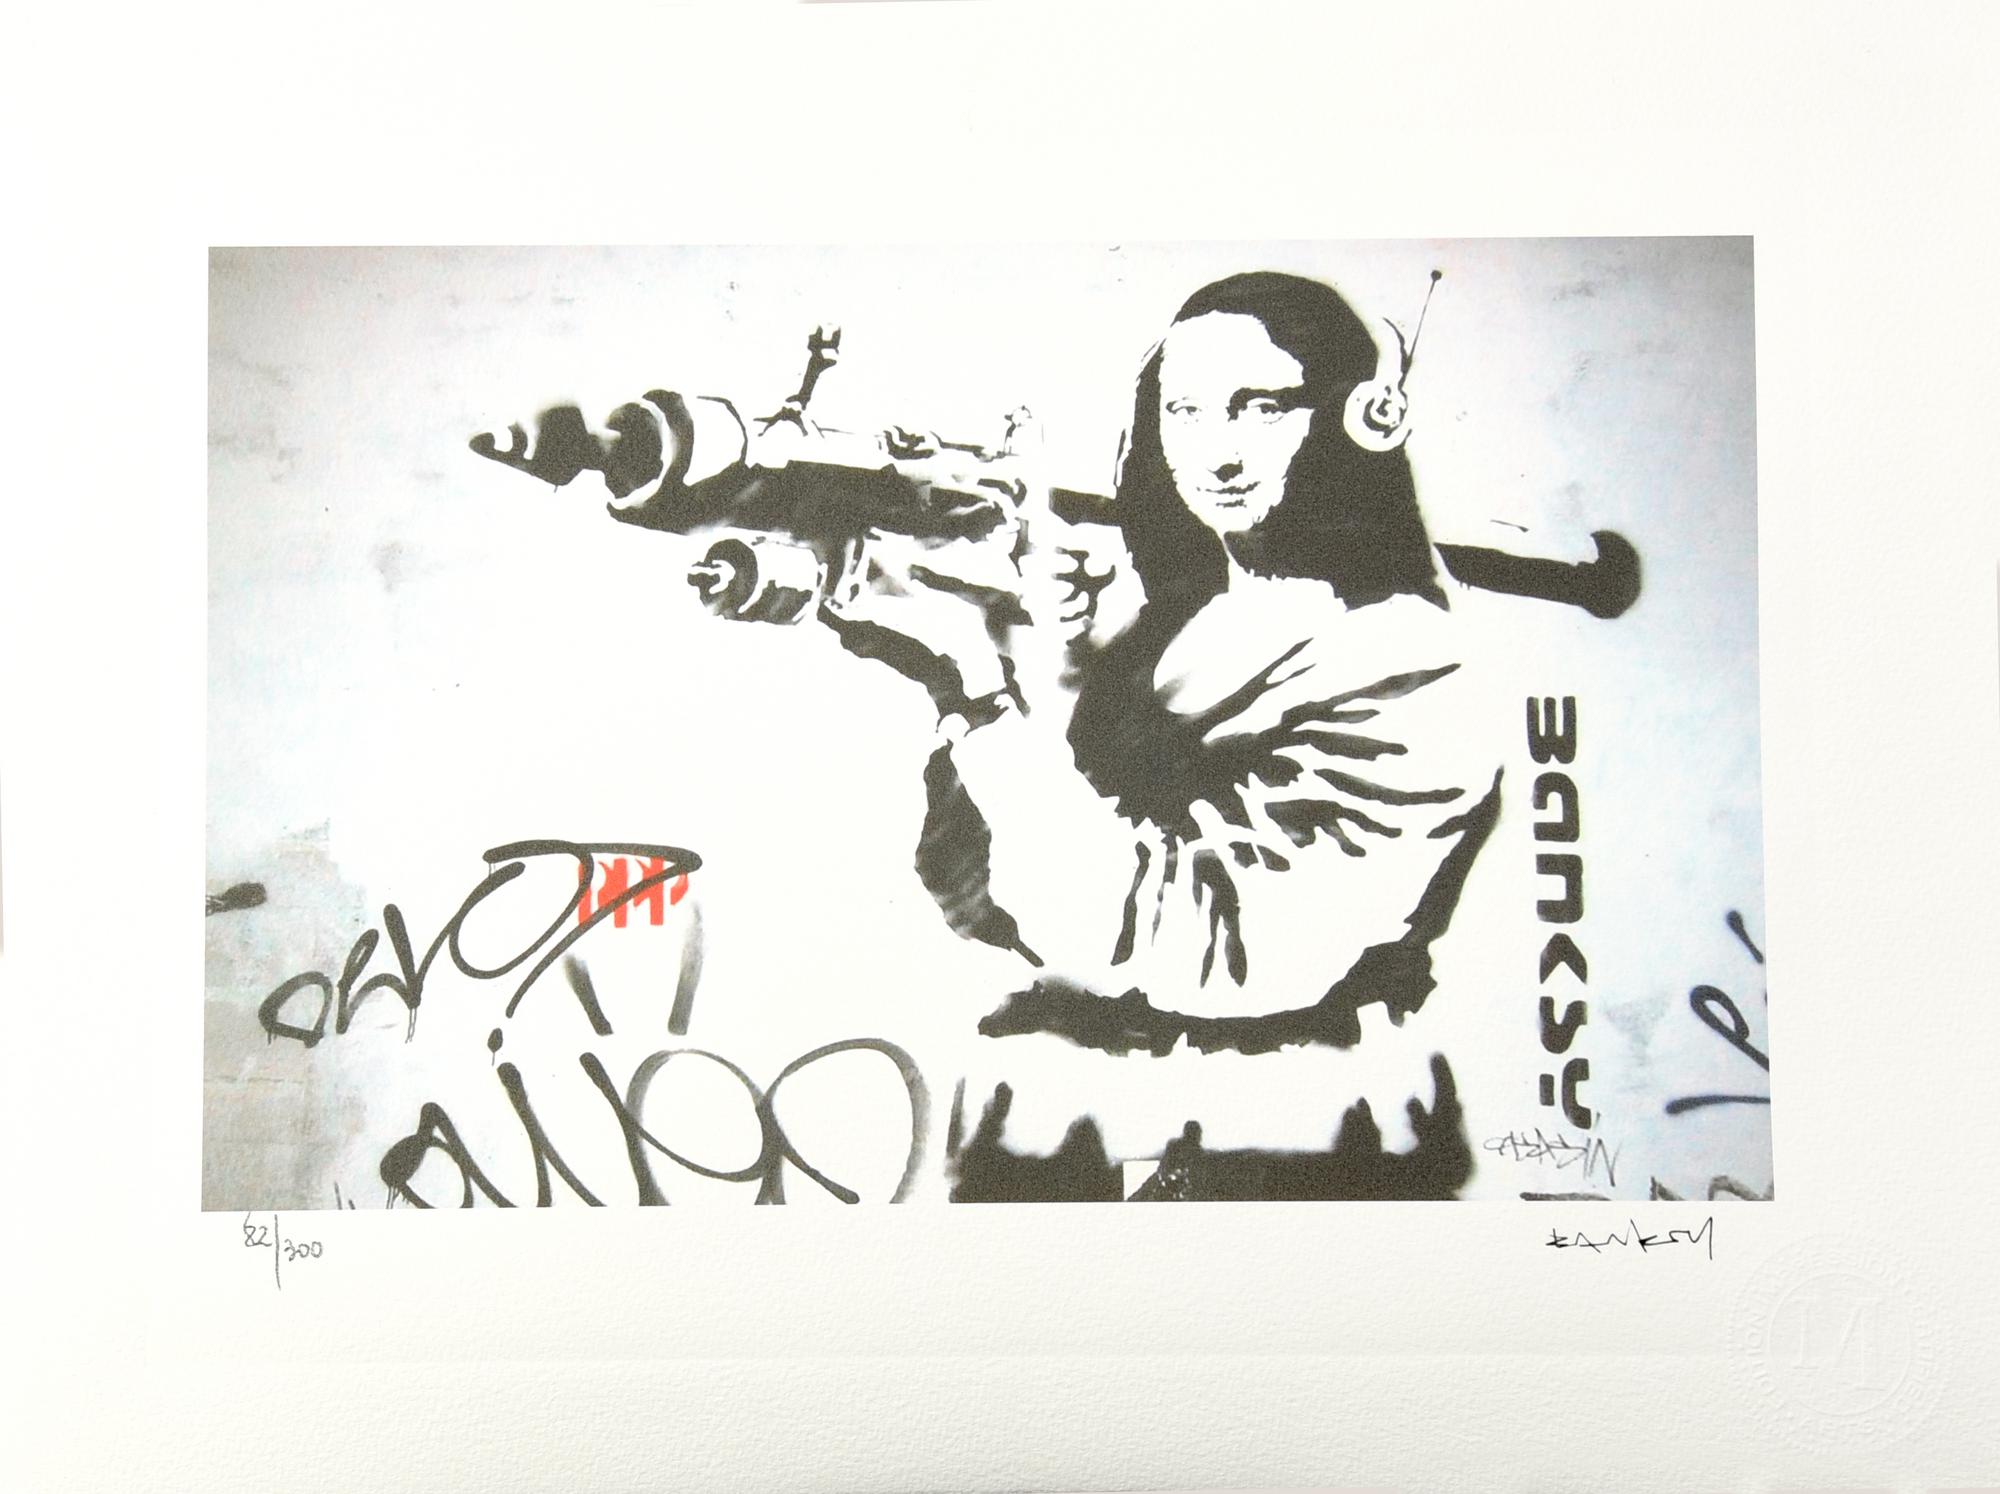 Da Banksy MONA LISA BAZOOKA eliografia, cm 28x38; es. 82/300 tiratura e...